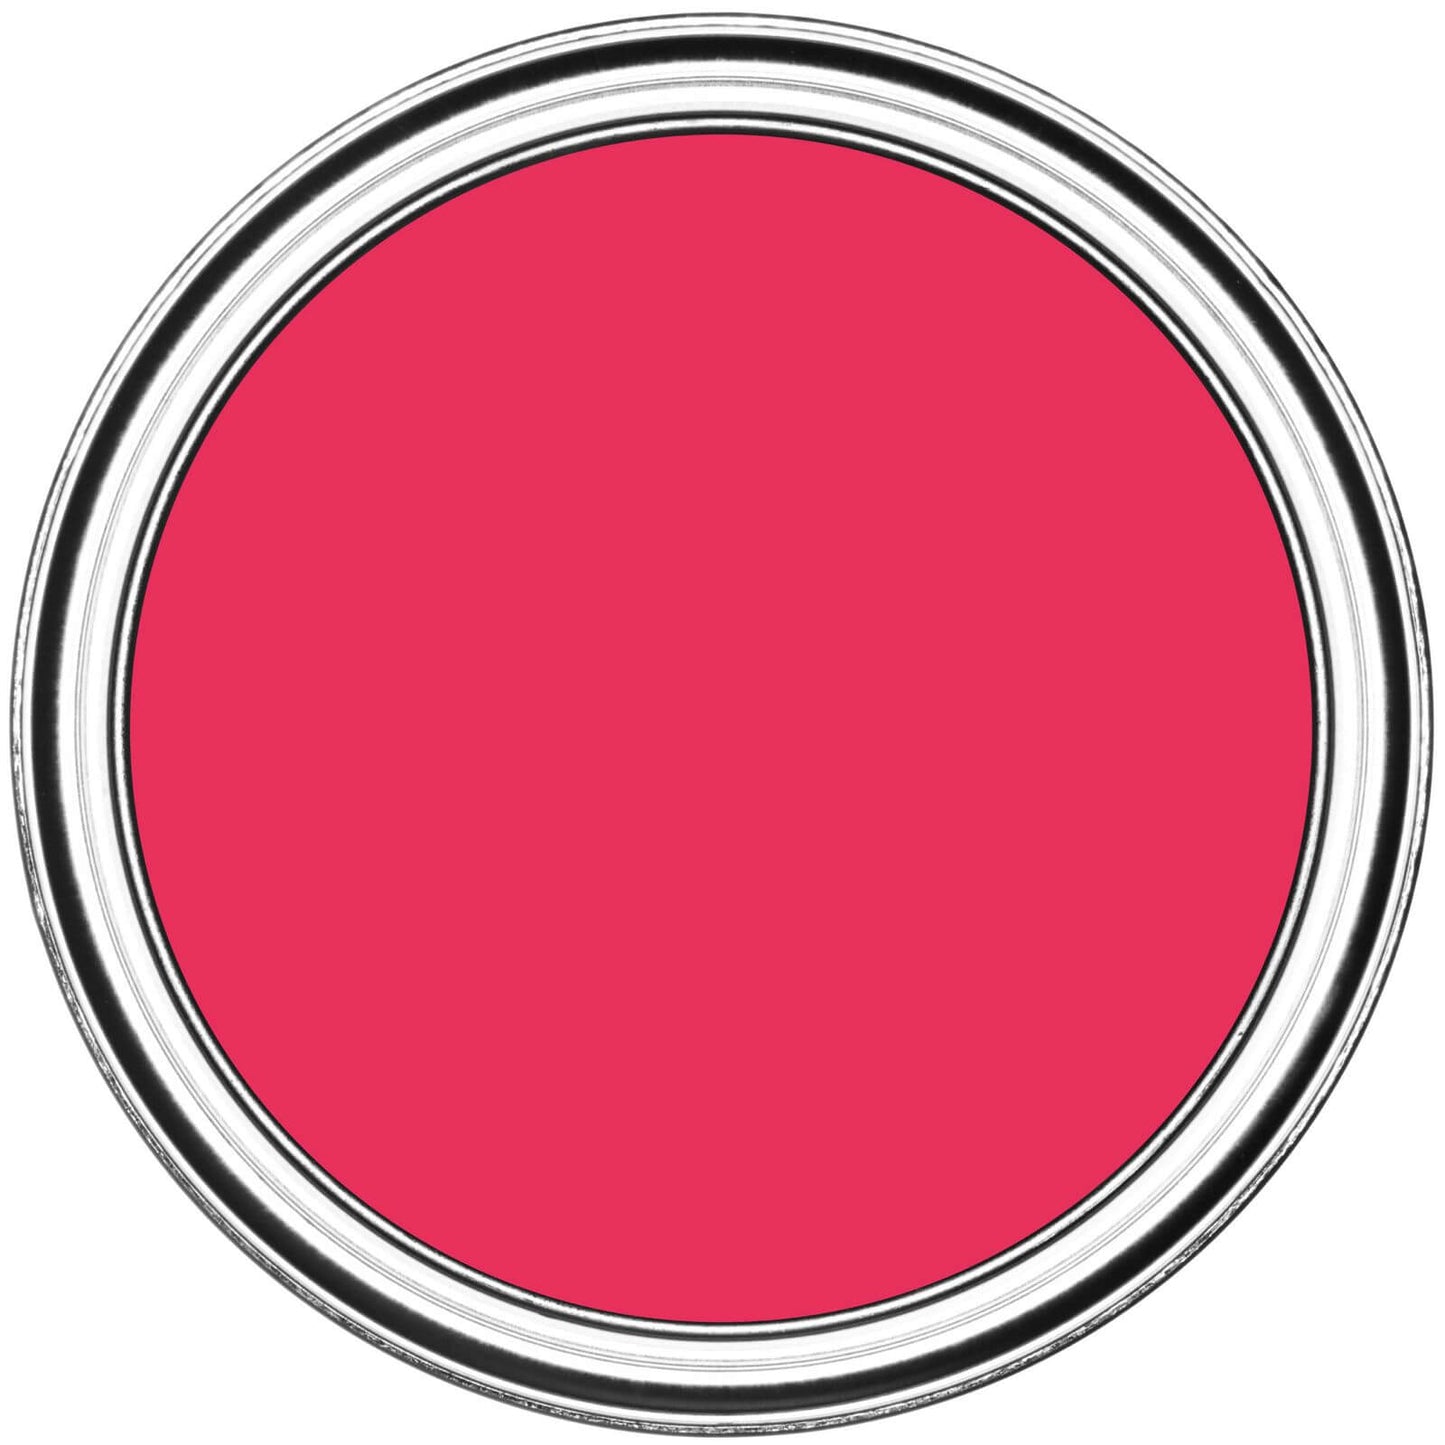 Rust-Oleum Neon Finish Universal Paint Pink